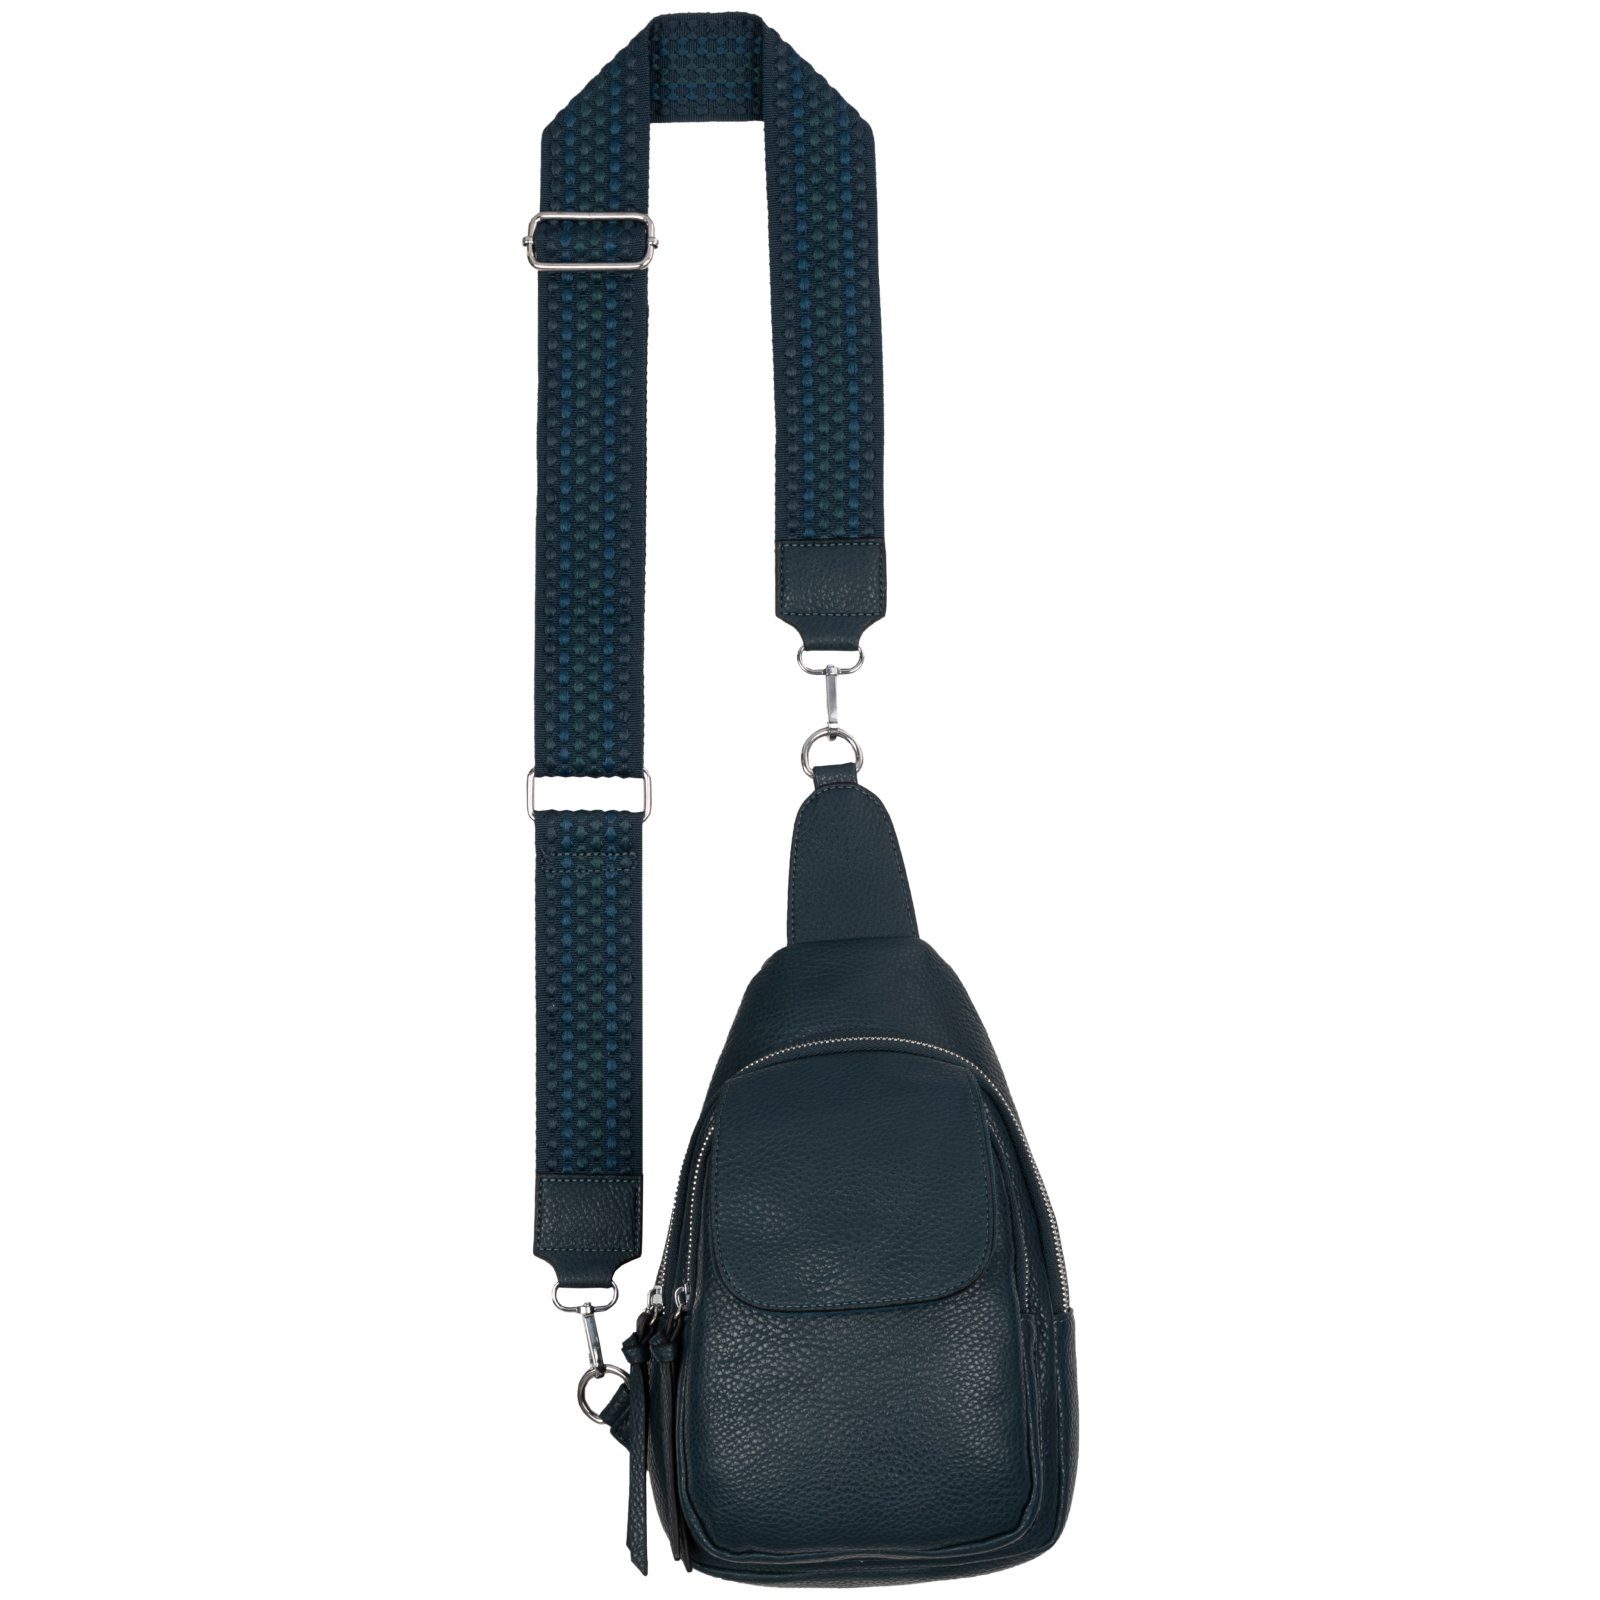 EAAKIE Umhängetasche Brusttasche Umhängetasche Schultertasche Cross Body Bag Kunstleder, als Schultertasche, CrossOver, Umhängetasche tragbar LAKE BLUE